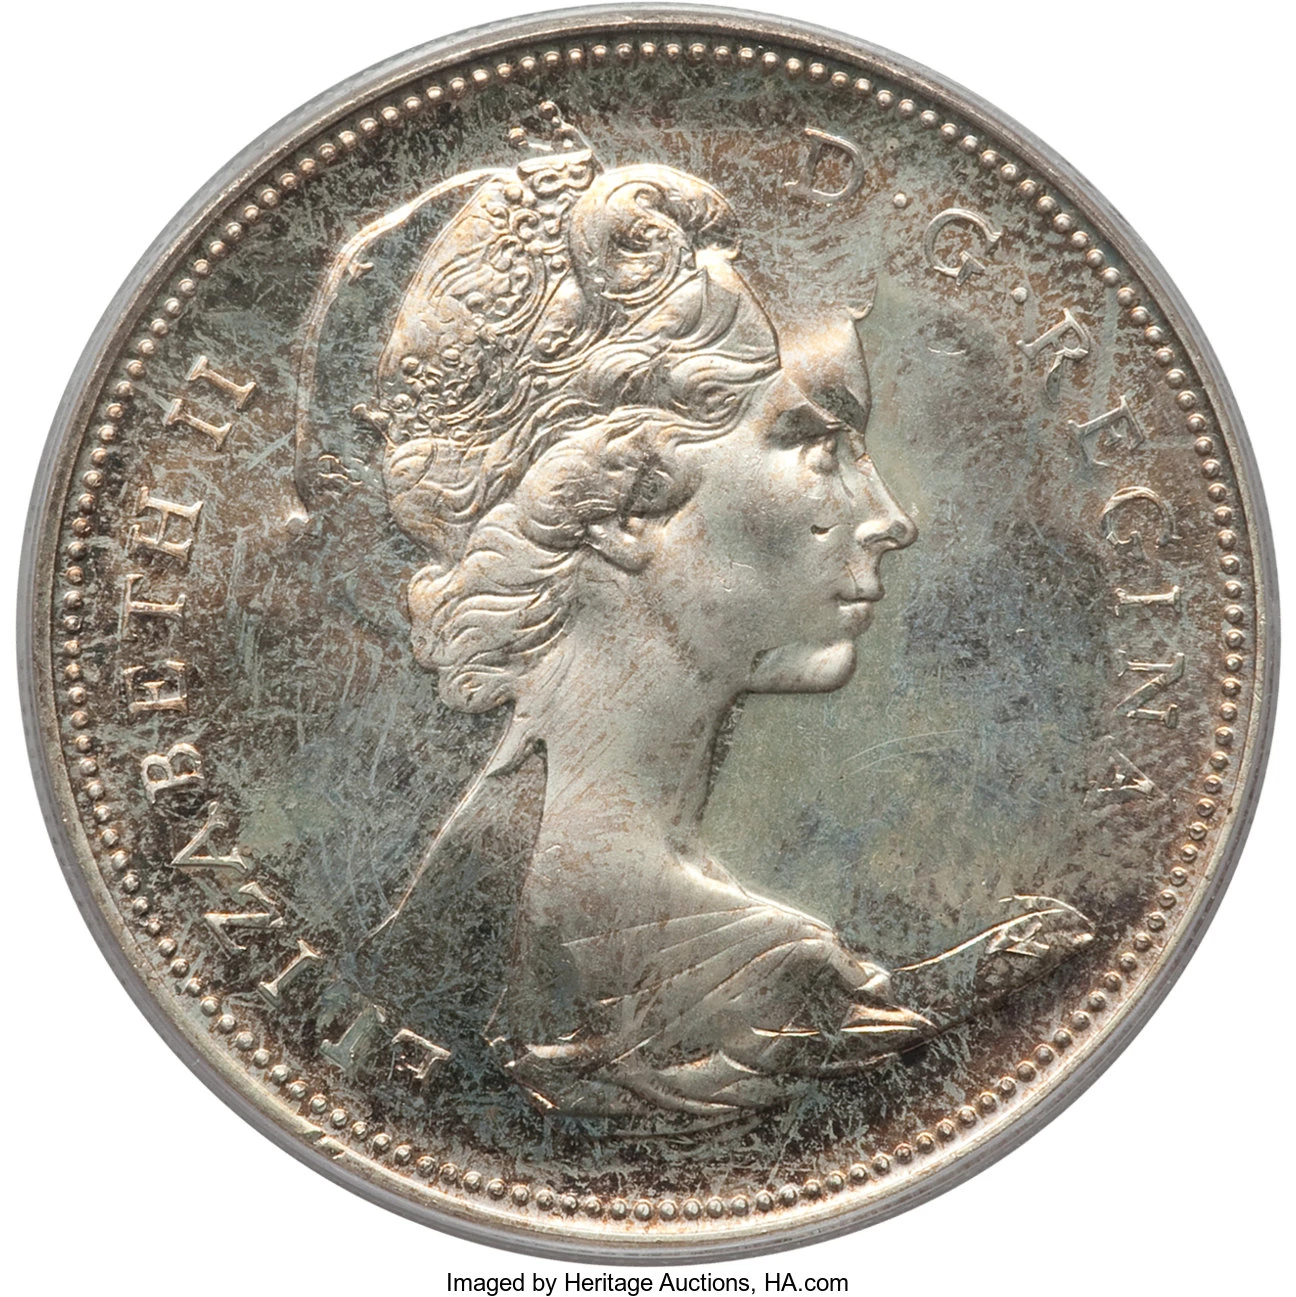 1967 $1 Dollar Silver Coin Values & Prices